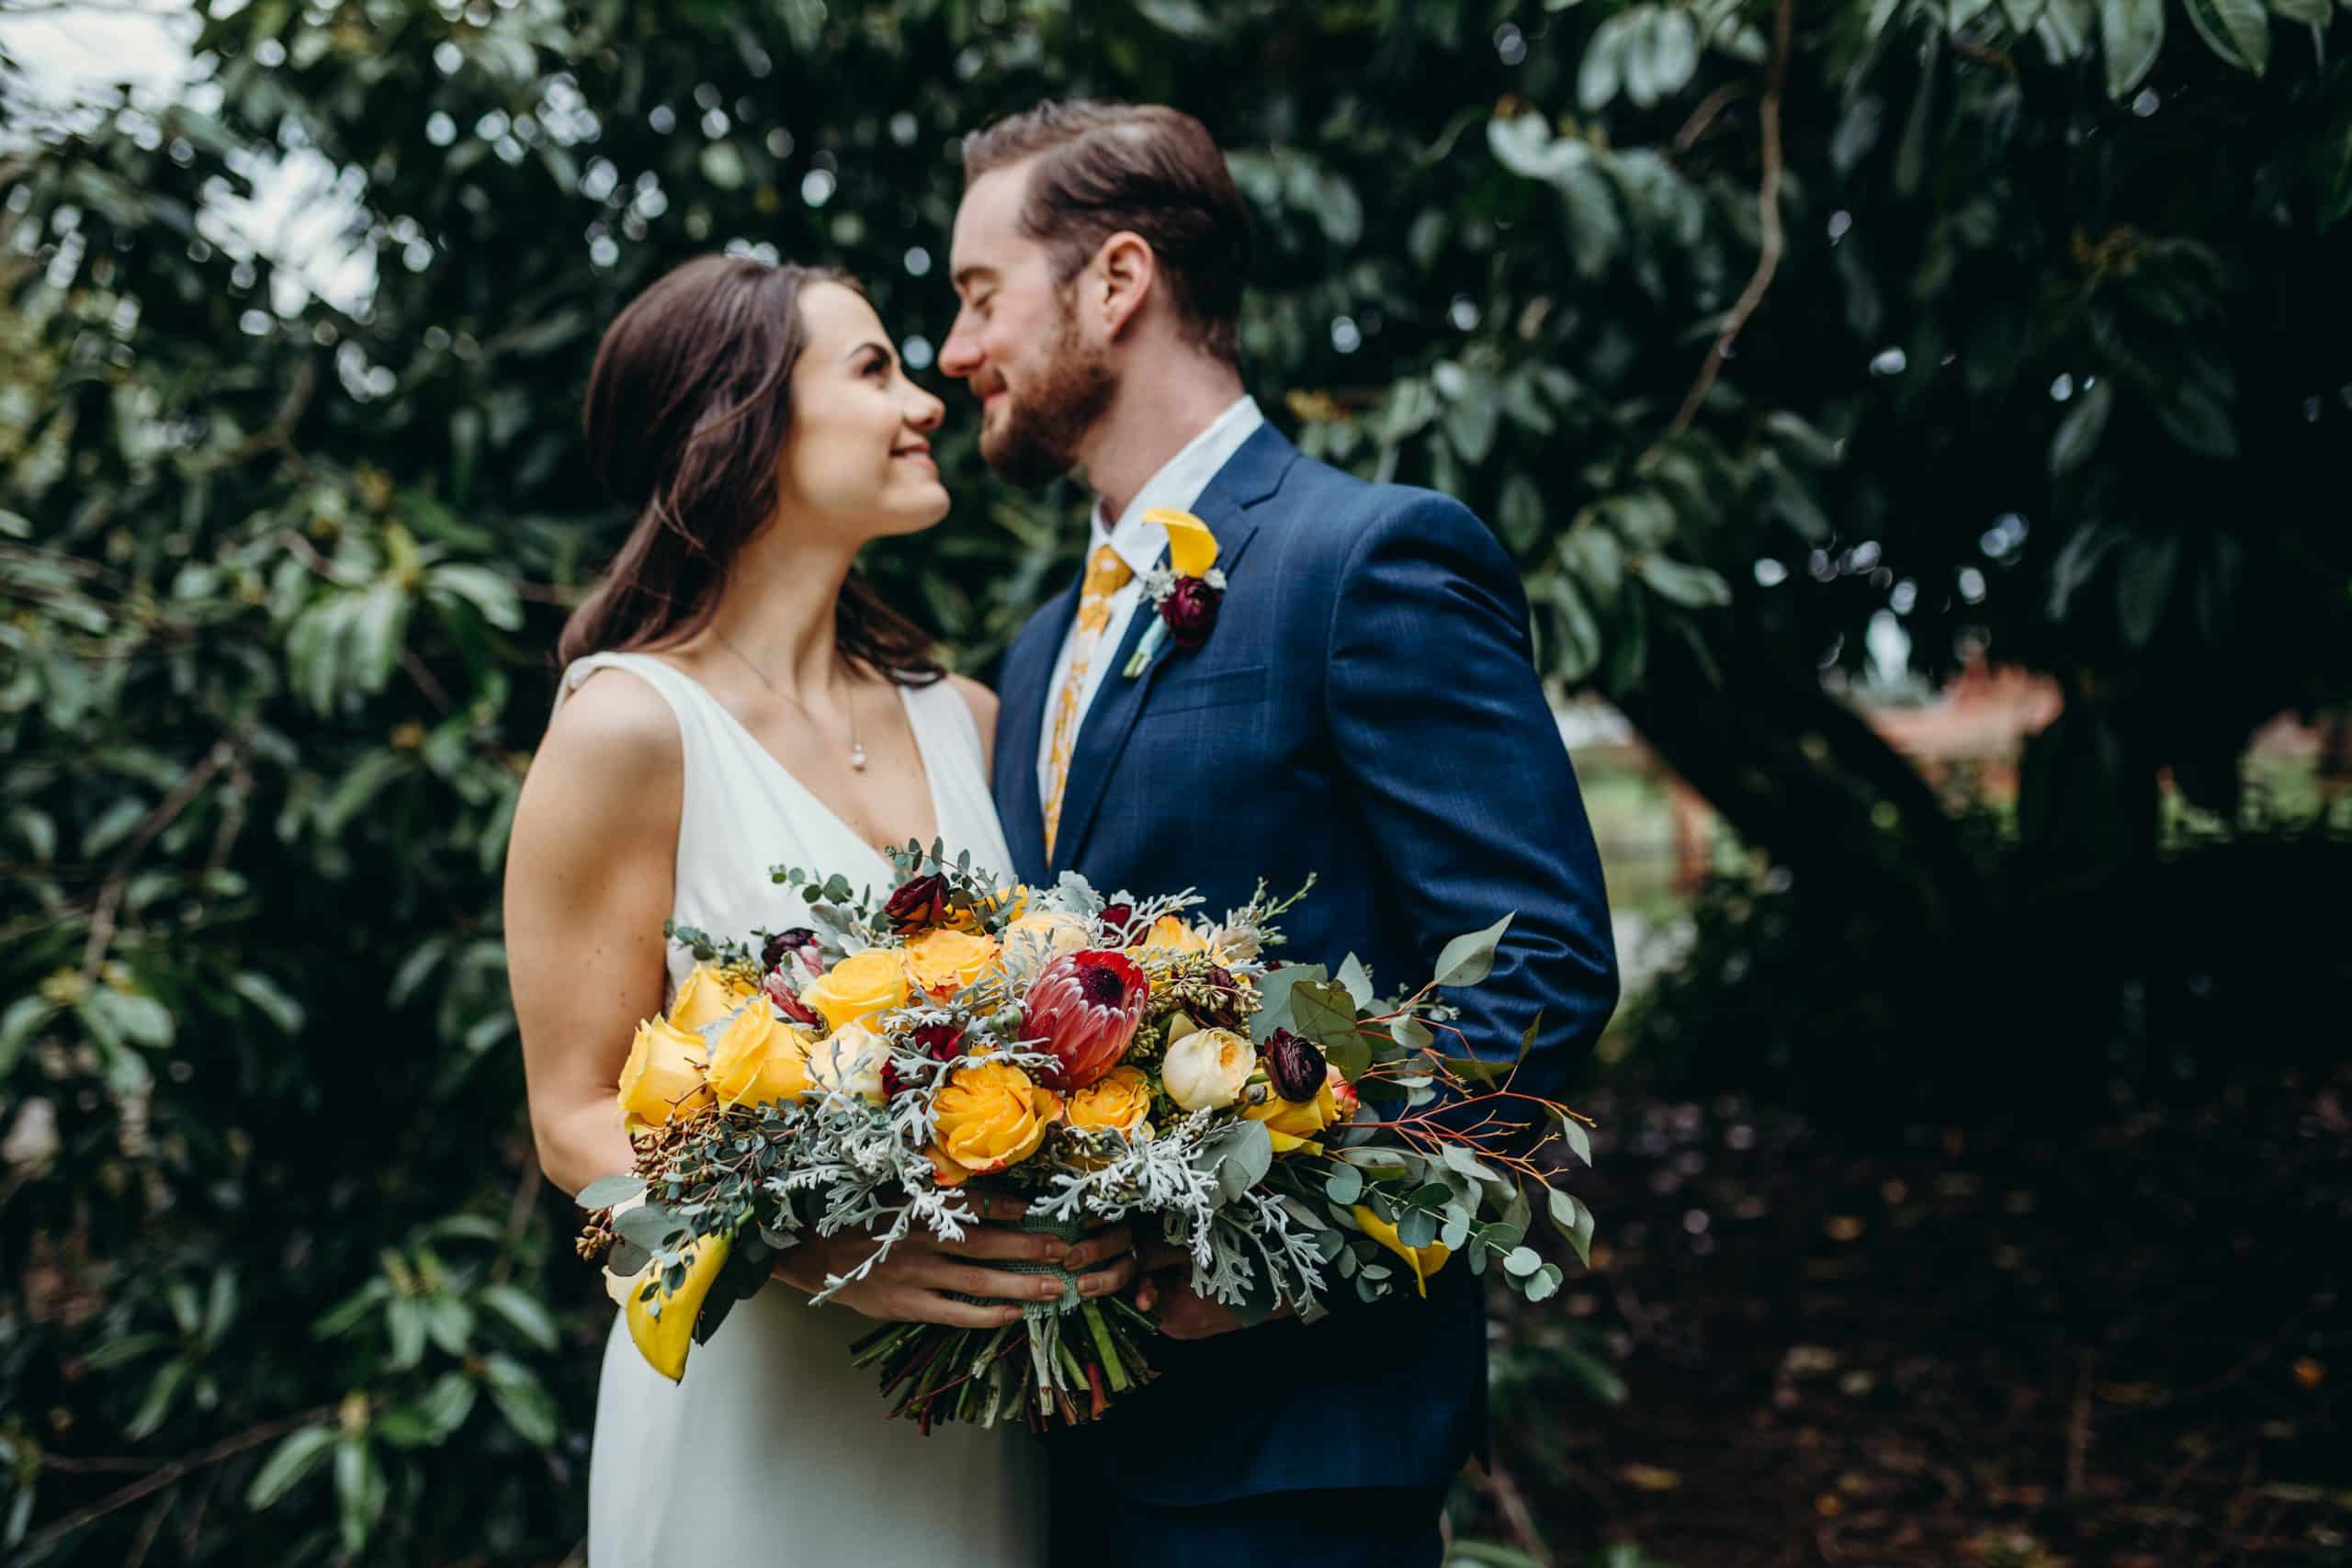 portland wedding florist, oregon wedding florist, oregon wedding flowers, portland wedding flowers, northwest wedding